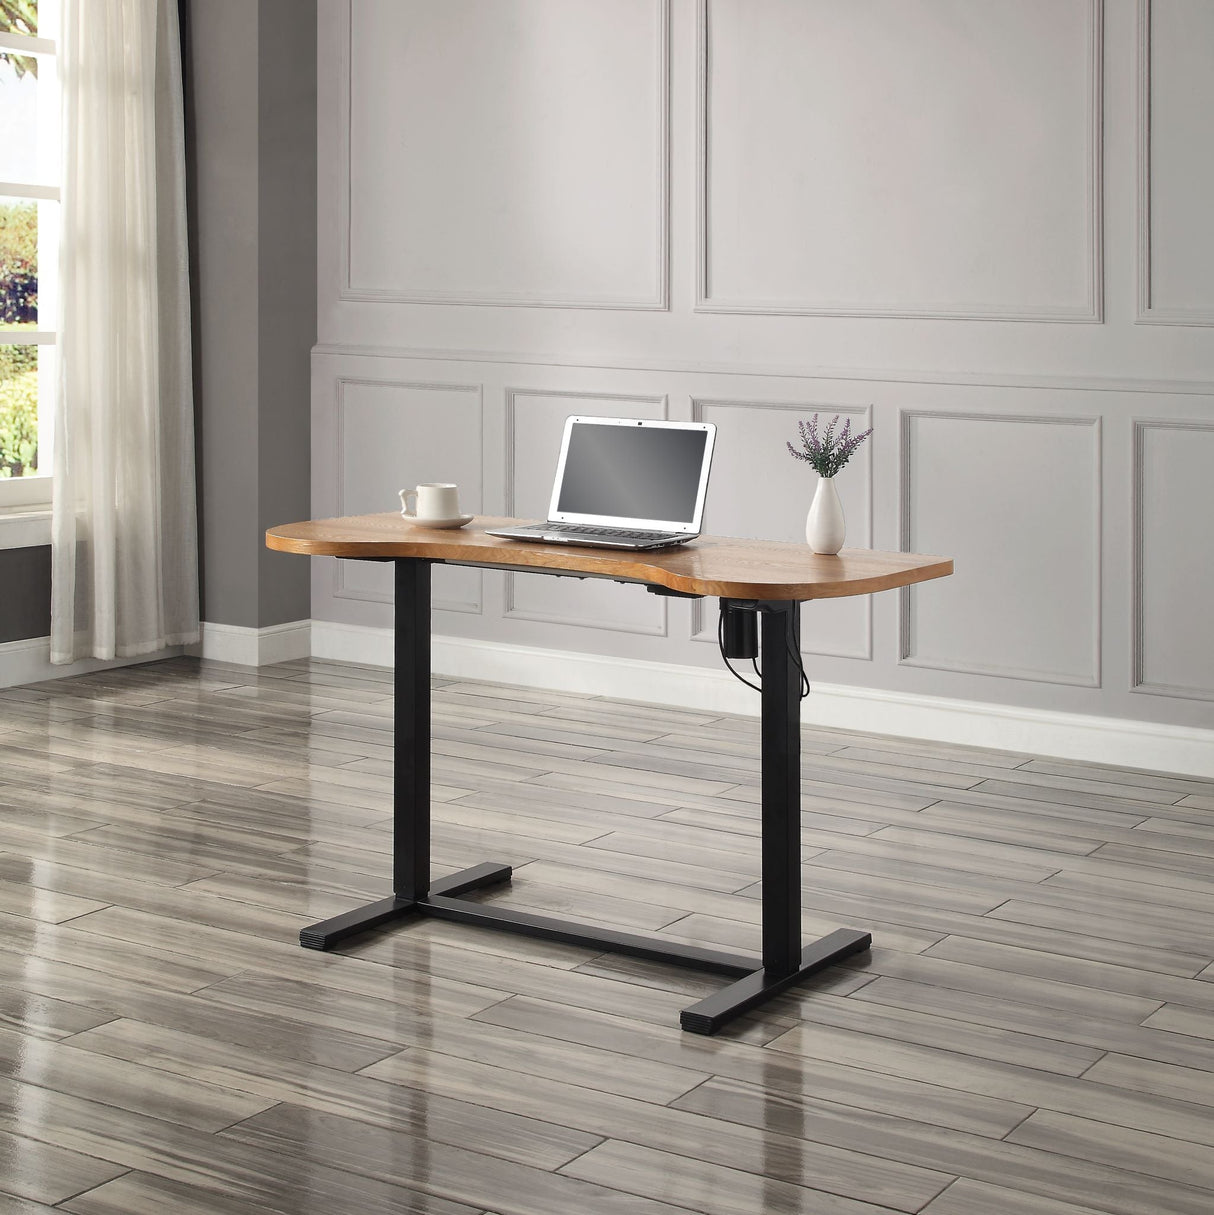 Jual San Francisco Electric Height Adjustable Desk in Oak and Black (PC715 Oak)